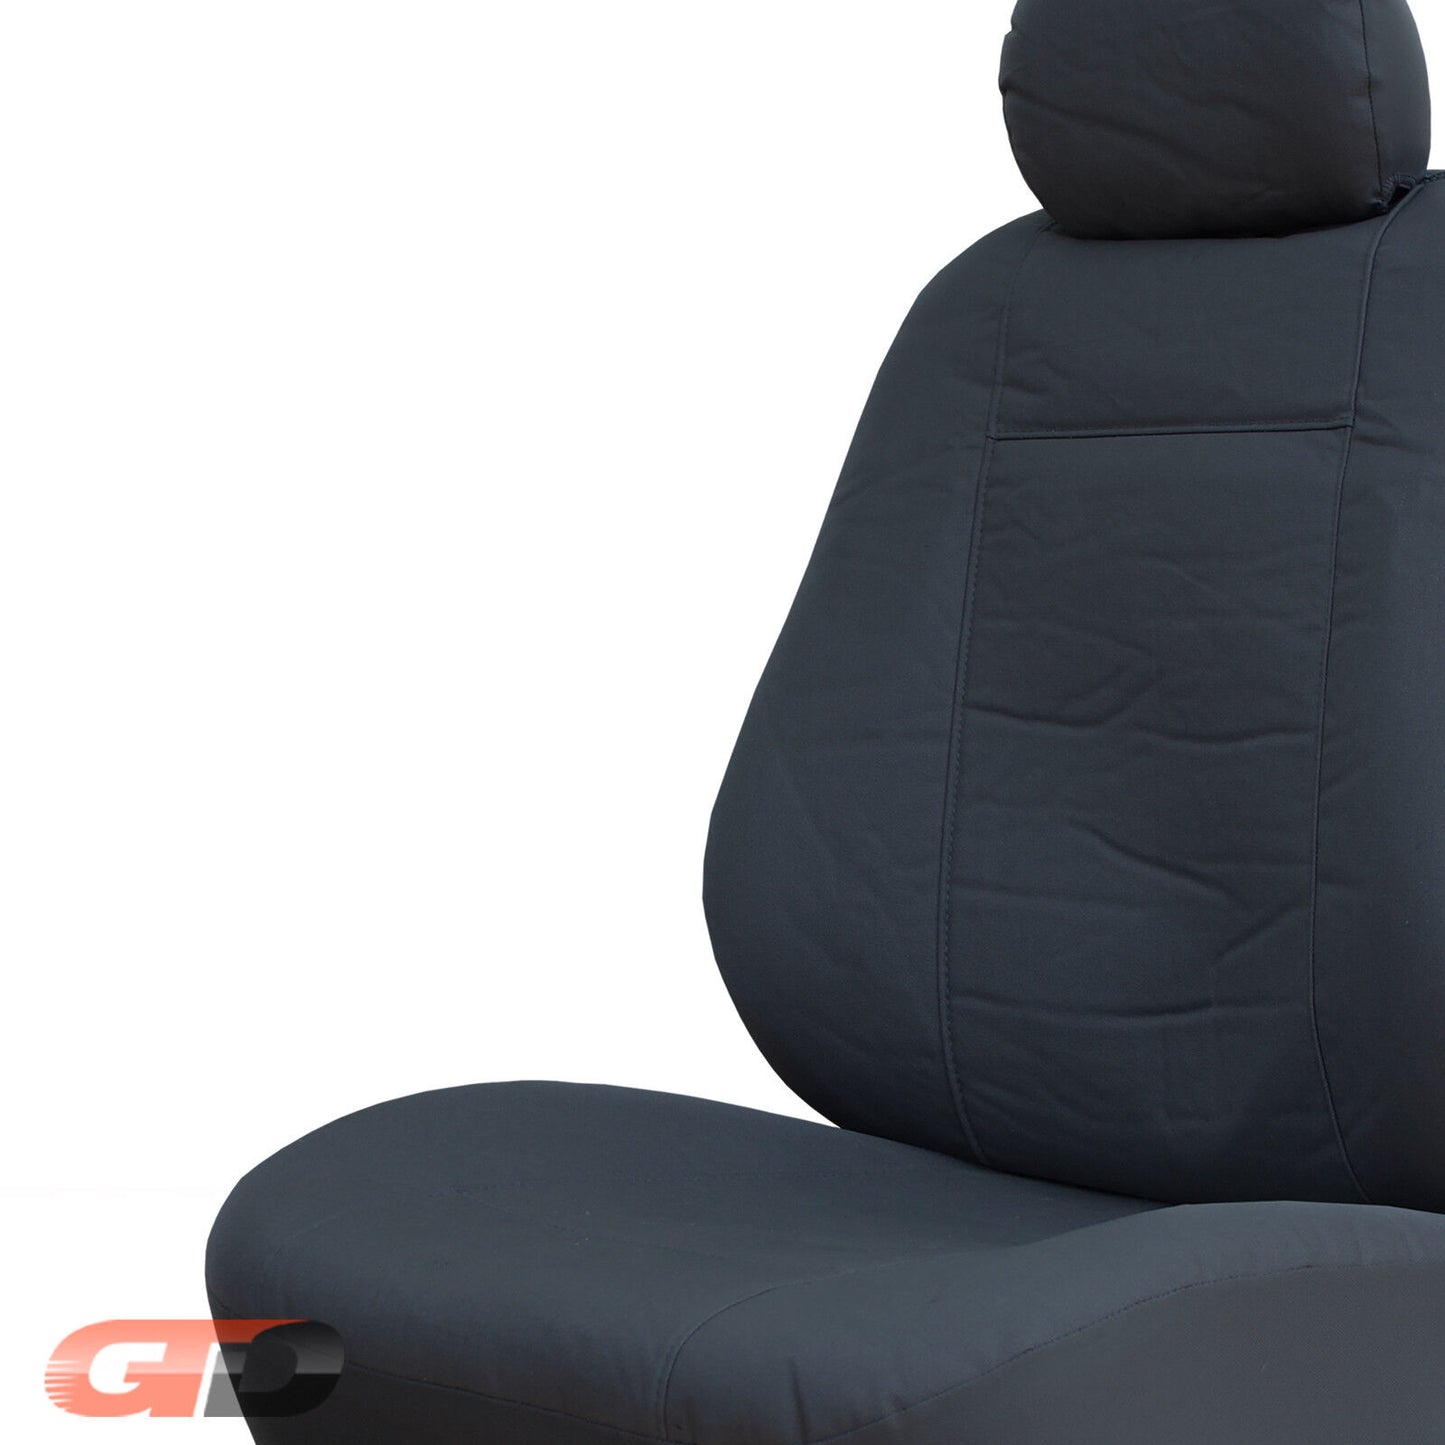 Tuff Canvas Seat Covers 2 Row For Mitsubishi TRITON Double Cab ML MN GLX/GLX-R Charcoal